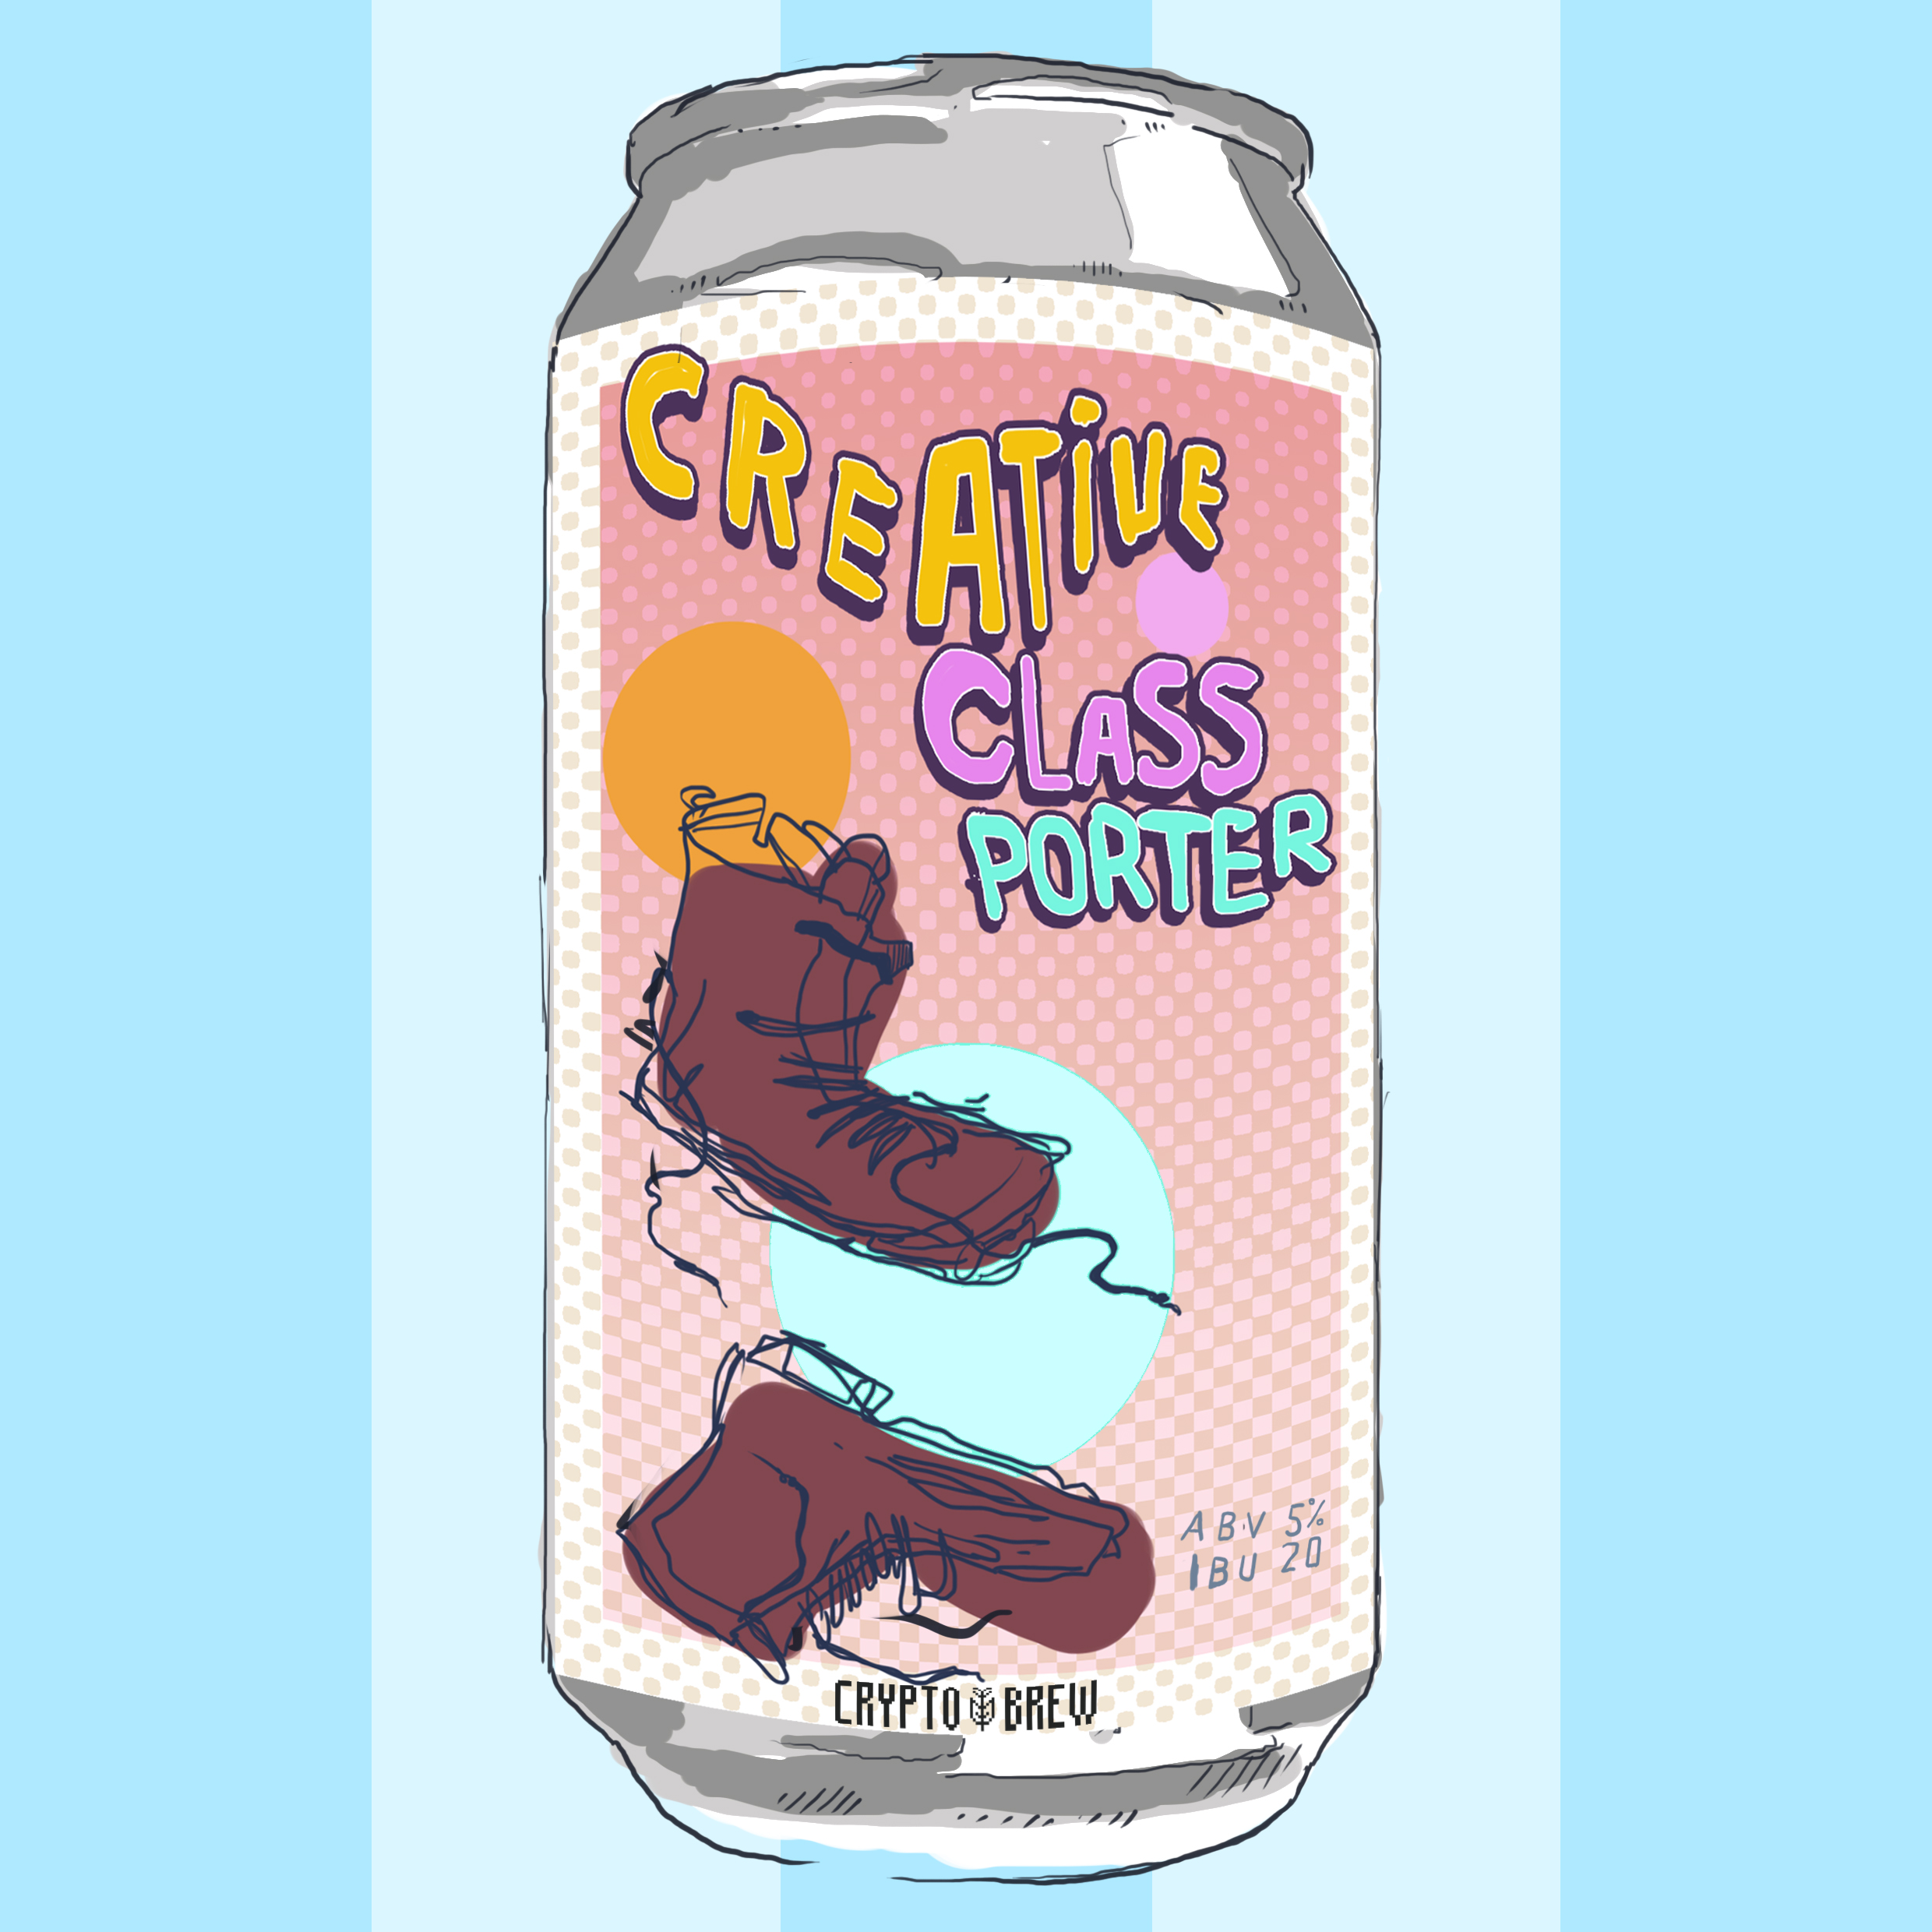 Crative Class Porter